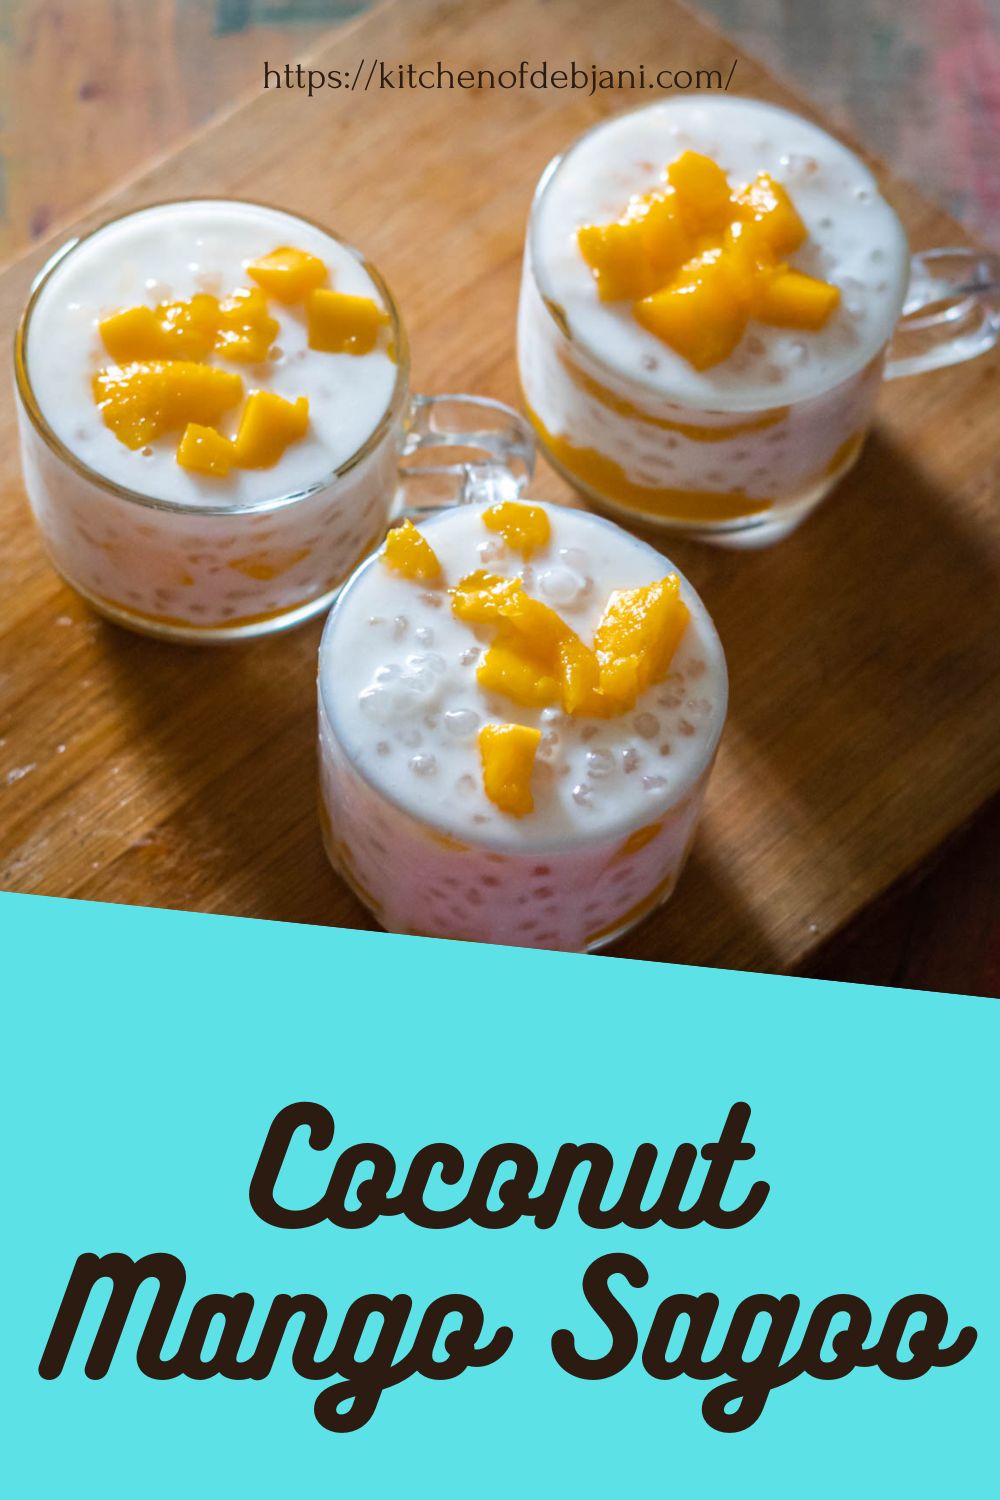 %Coconut Mango Sagoo Recipe Food Pinterest Pin